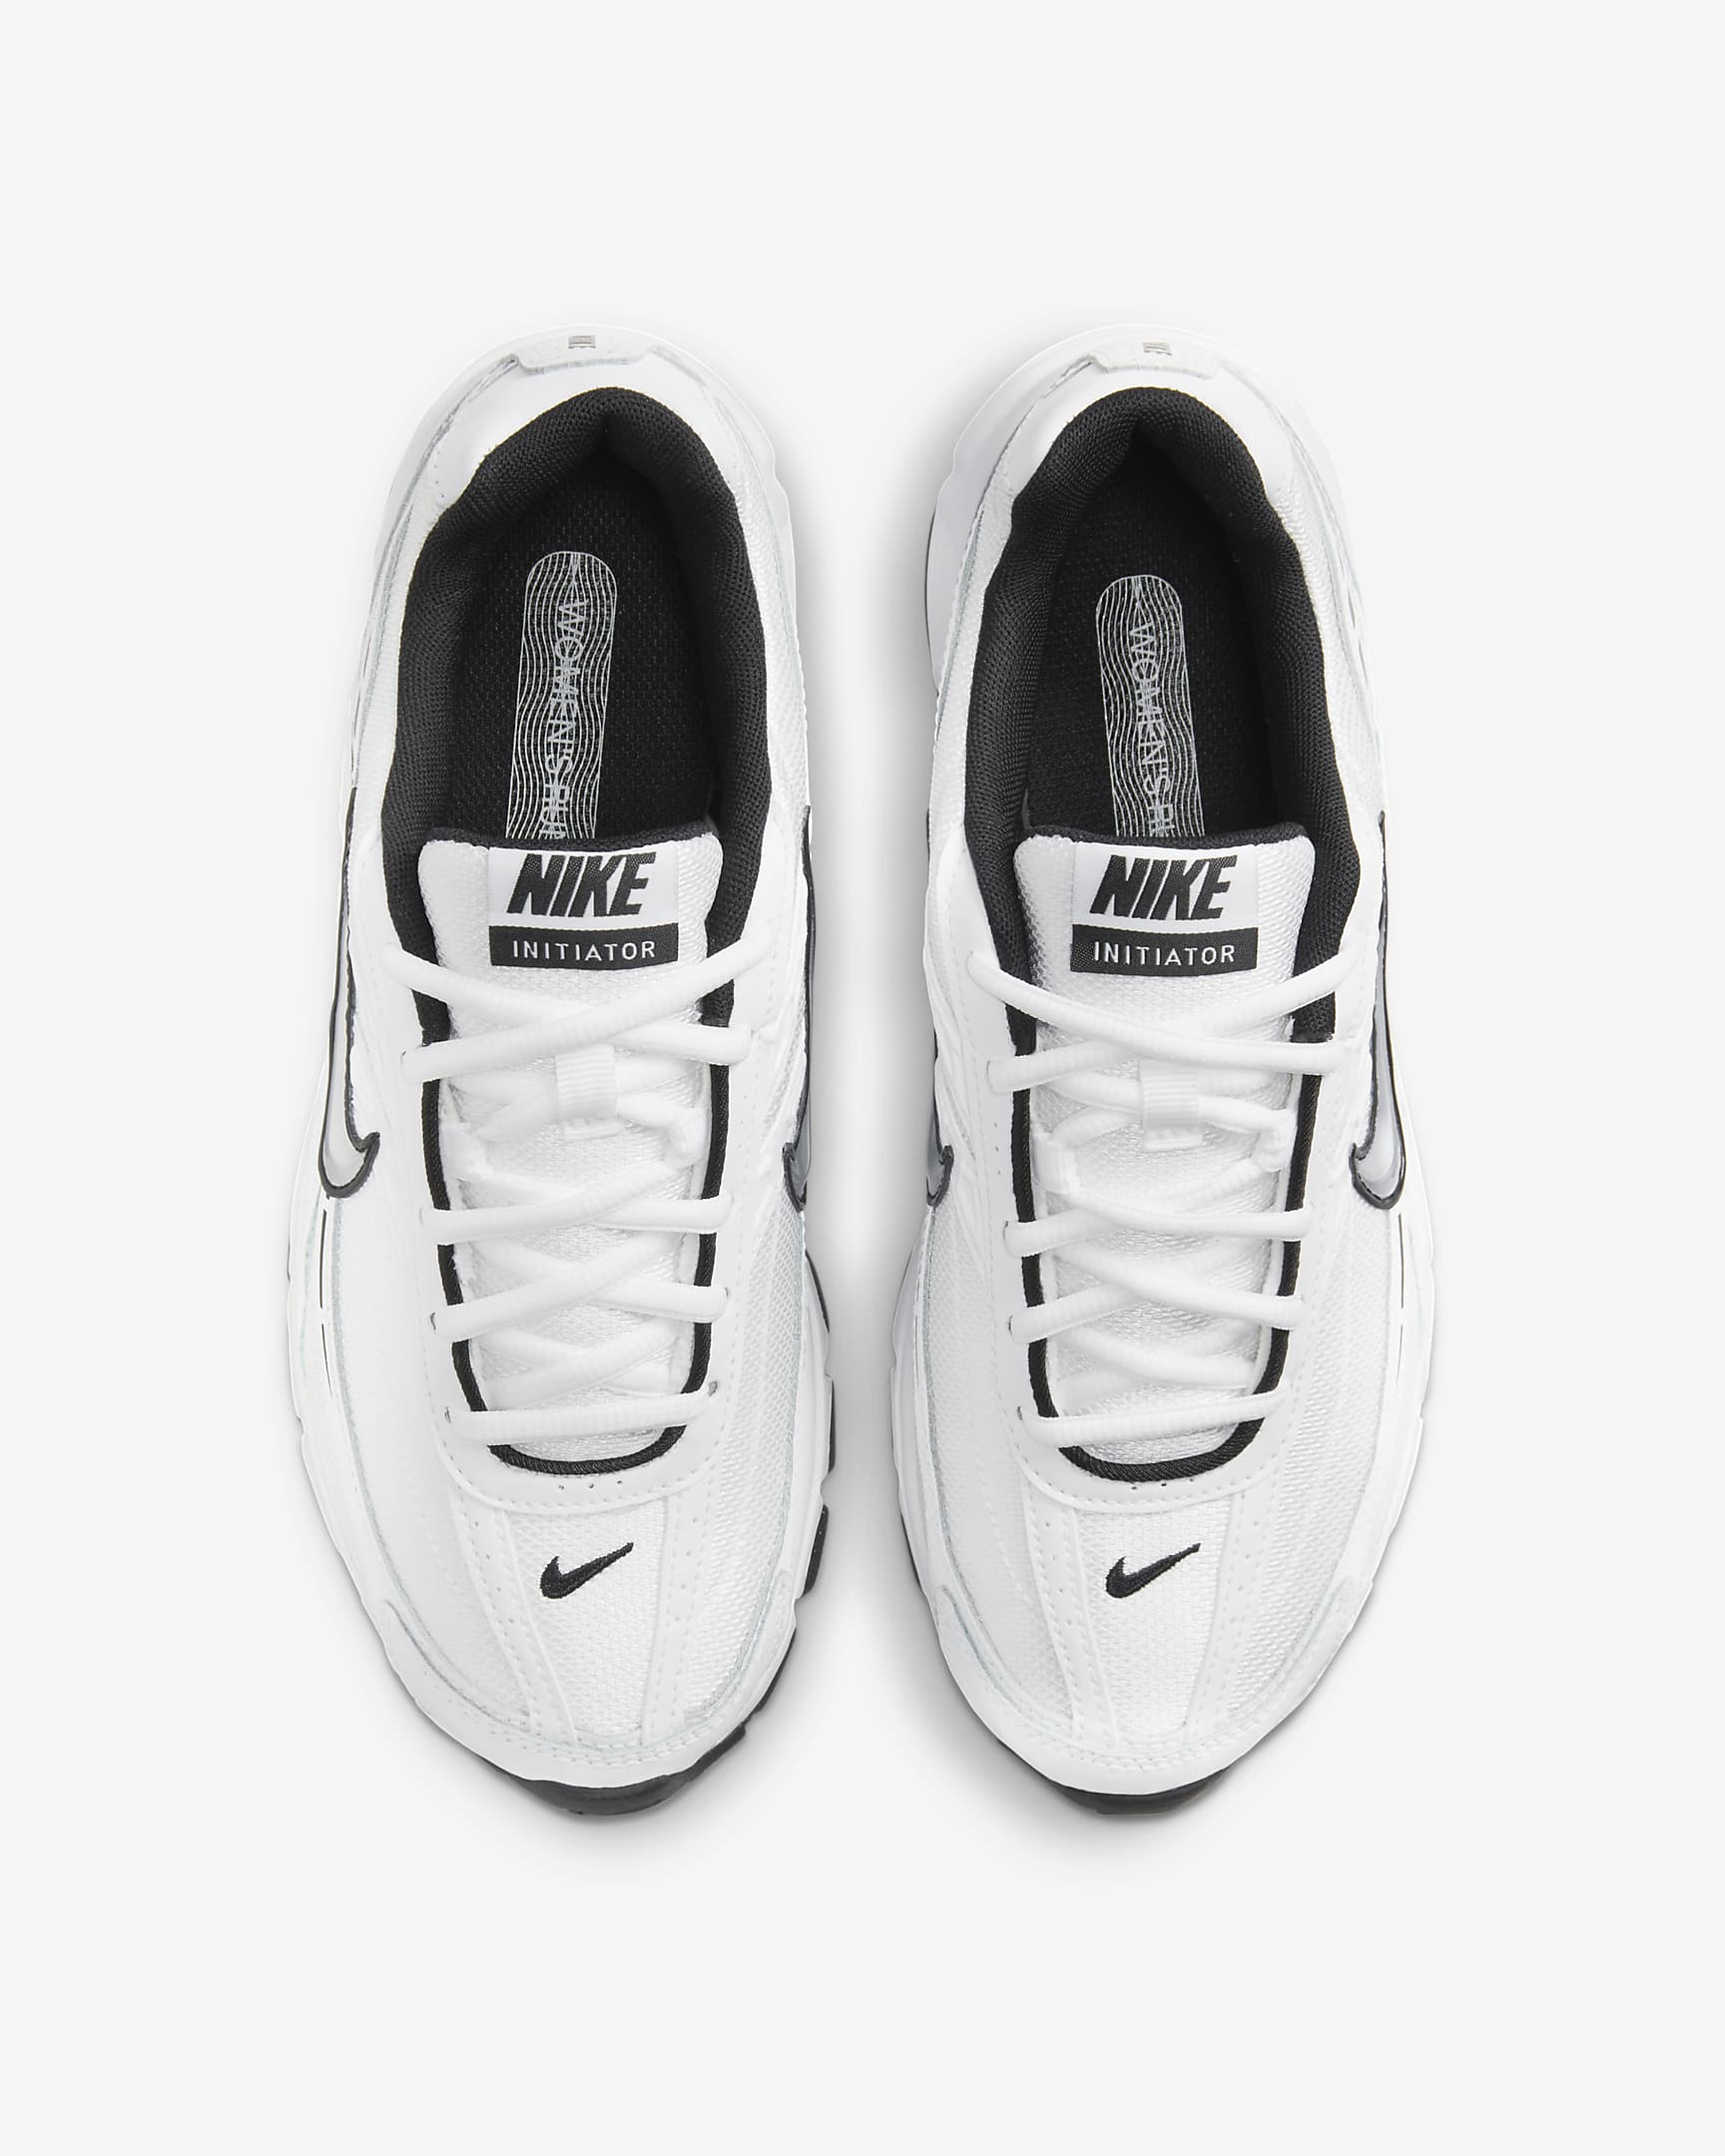 Nike Initiator Women's Shoes - White/White/Black/Metallic Silver